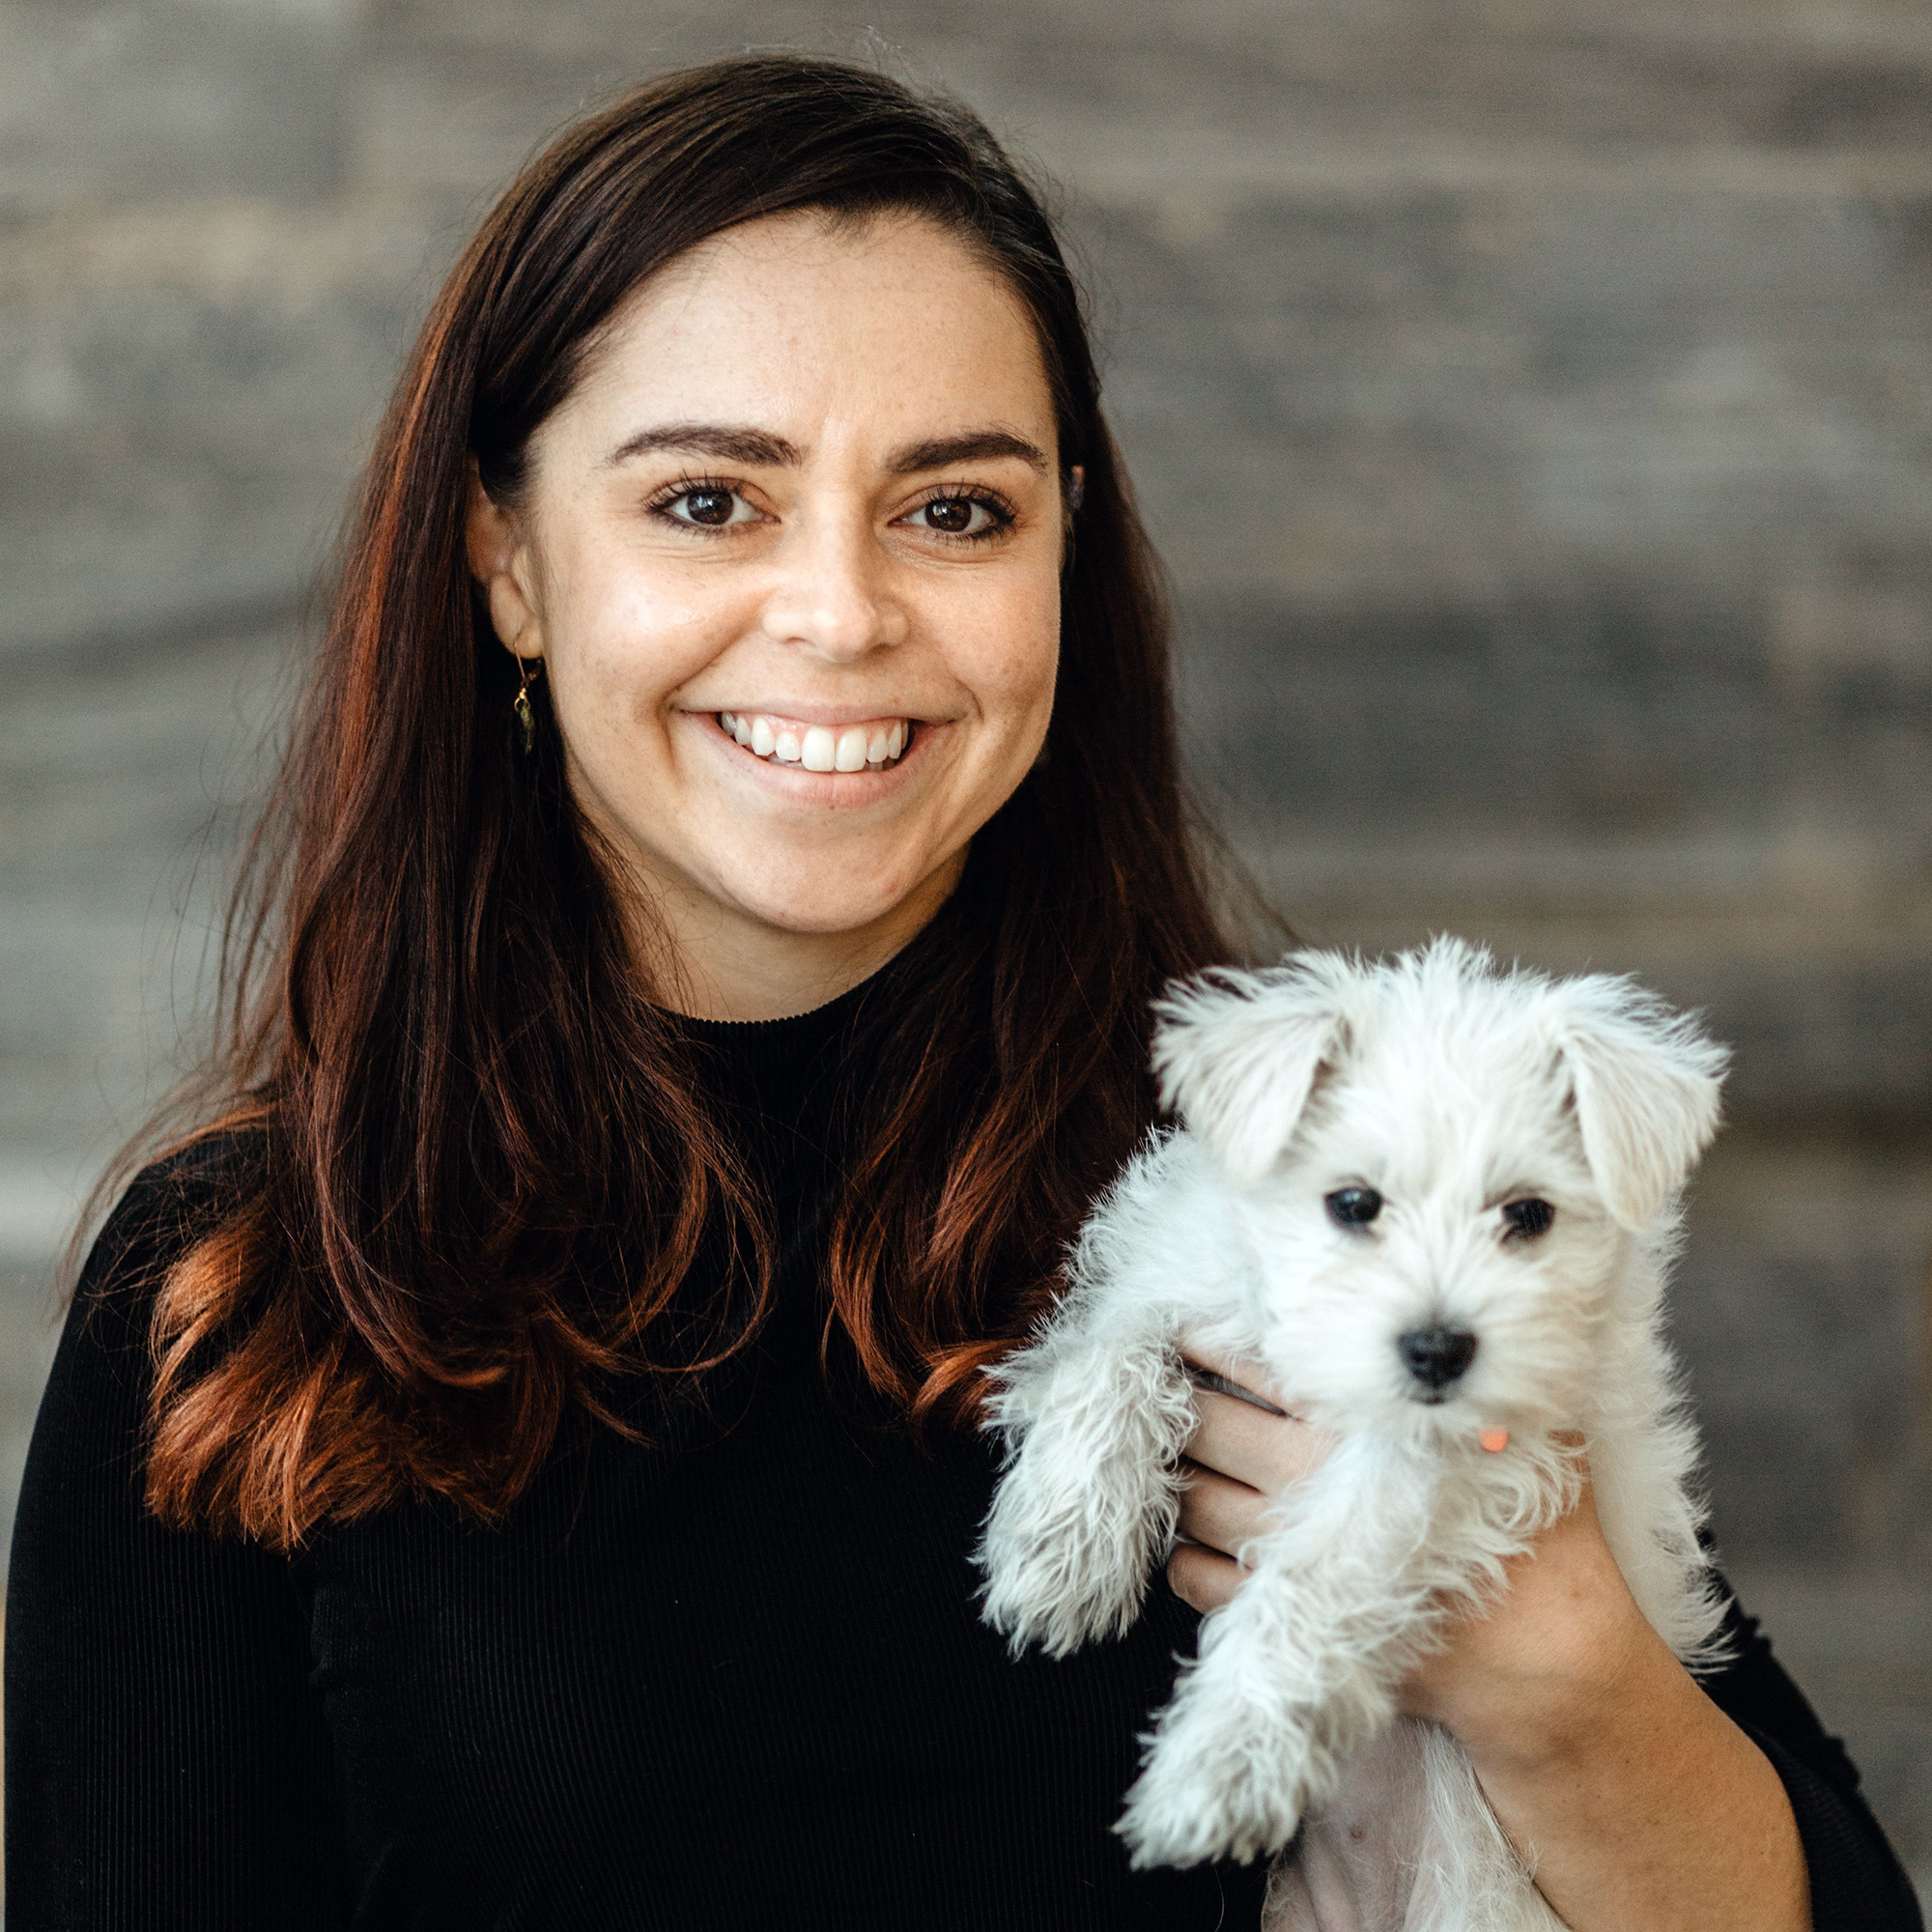 Elisa Sepulveda with white dog